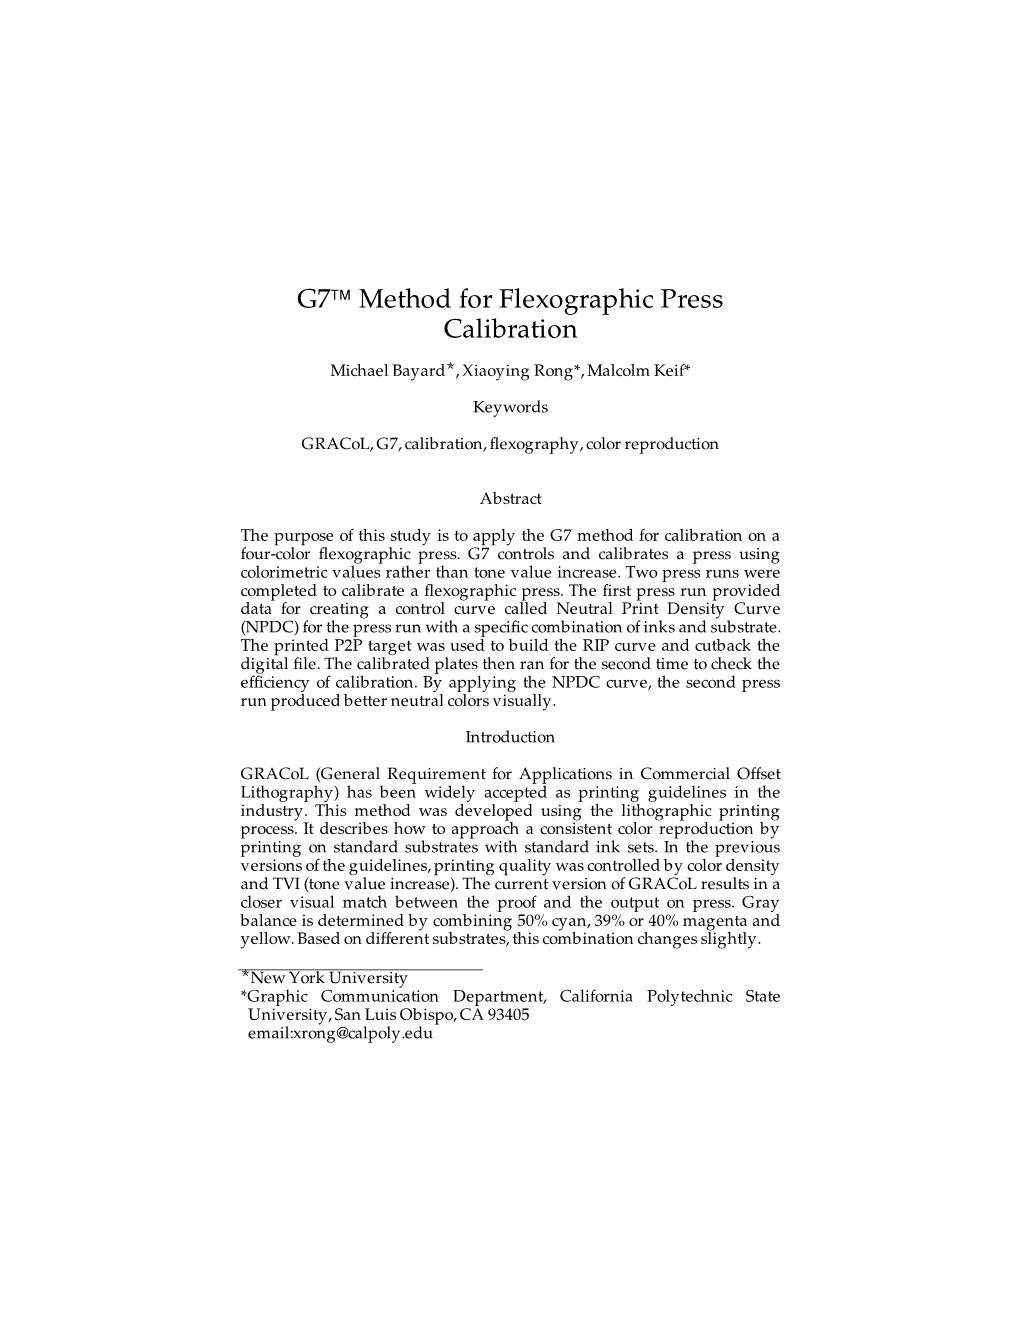 G7™ Method for Flexographic Press Calibration